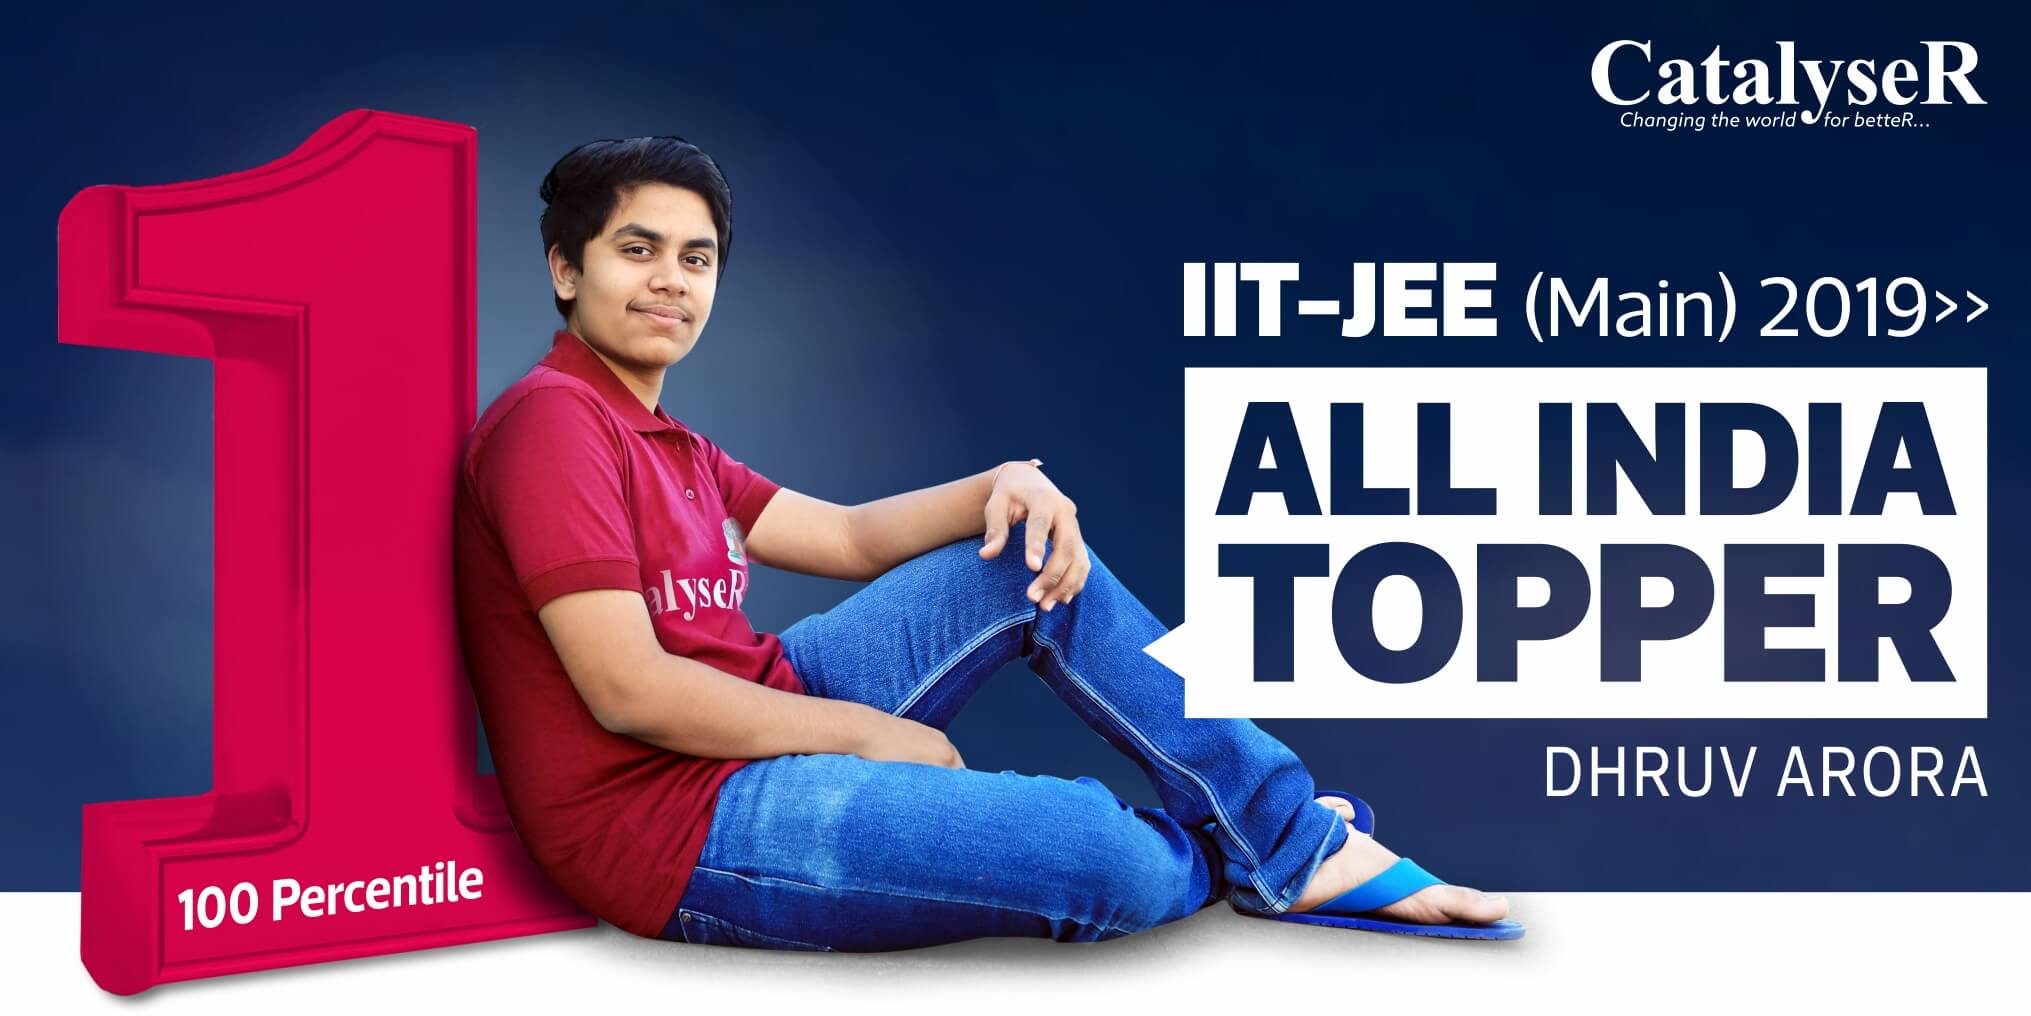 IIT JEE Main 2019 all india topper Dhruv Arora